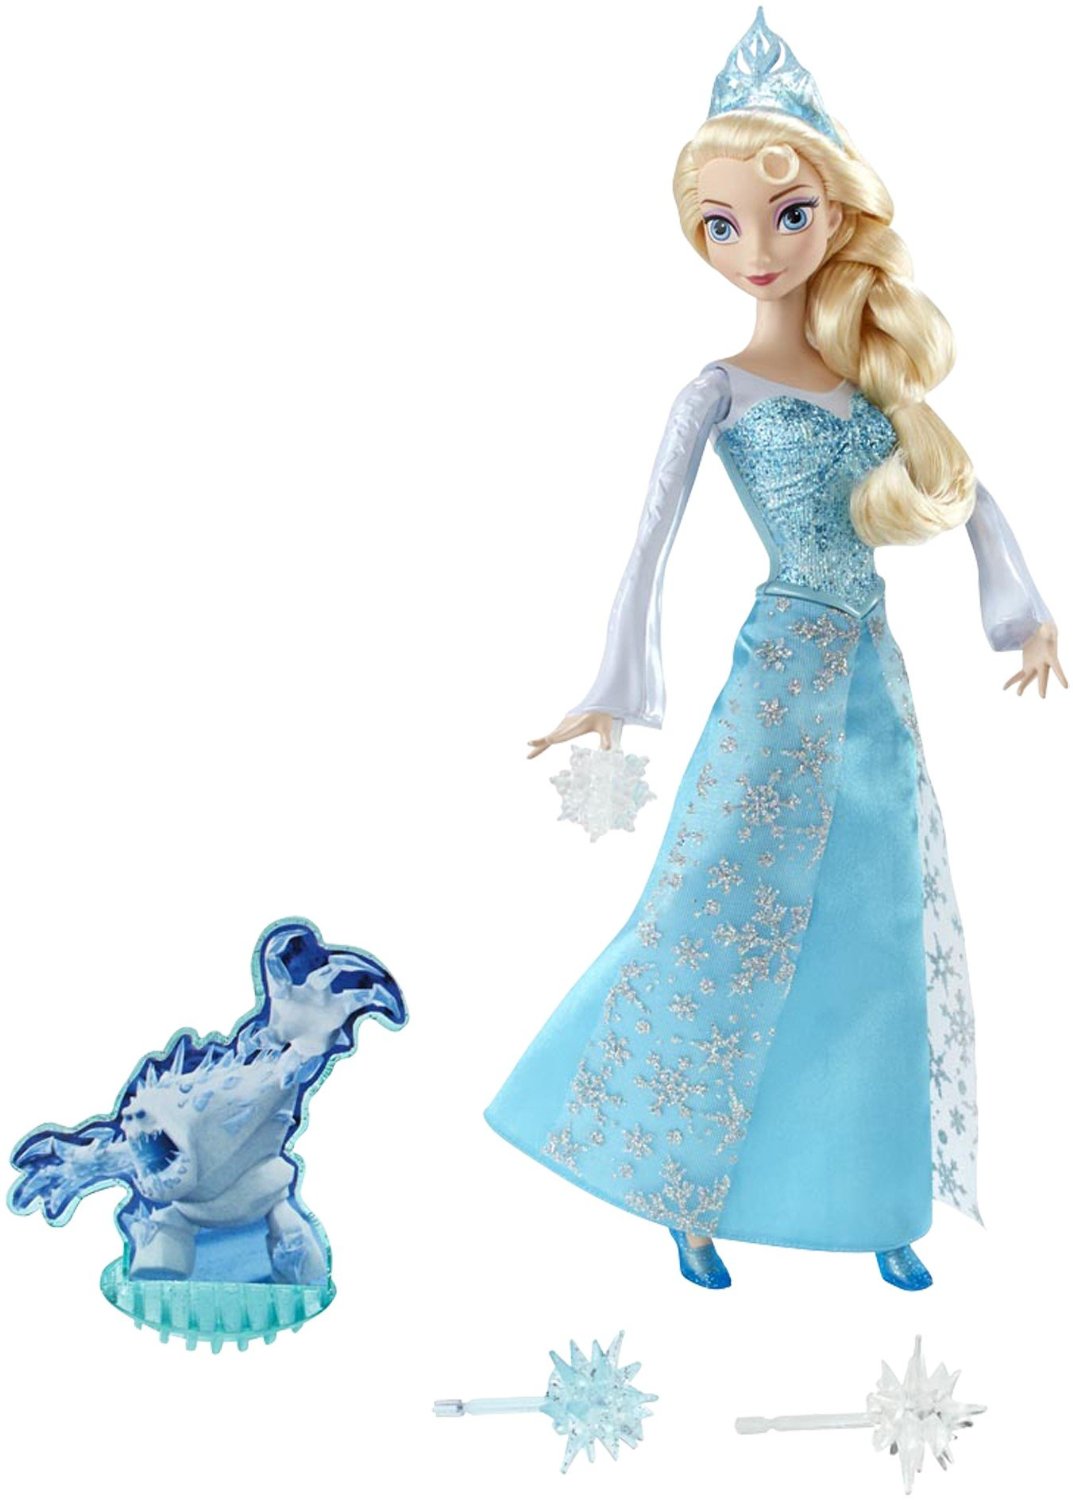 Disney Frozen Ice Power Elsa Doll Only $16.95 on Amazon! Shoot Snowflakes From Elsa’s Hand!